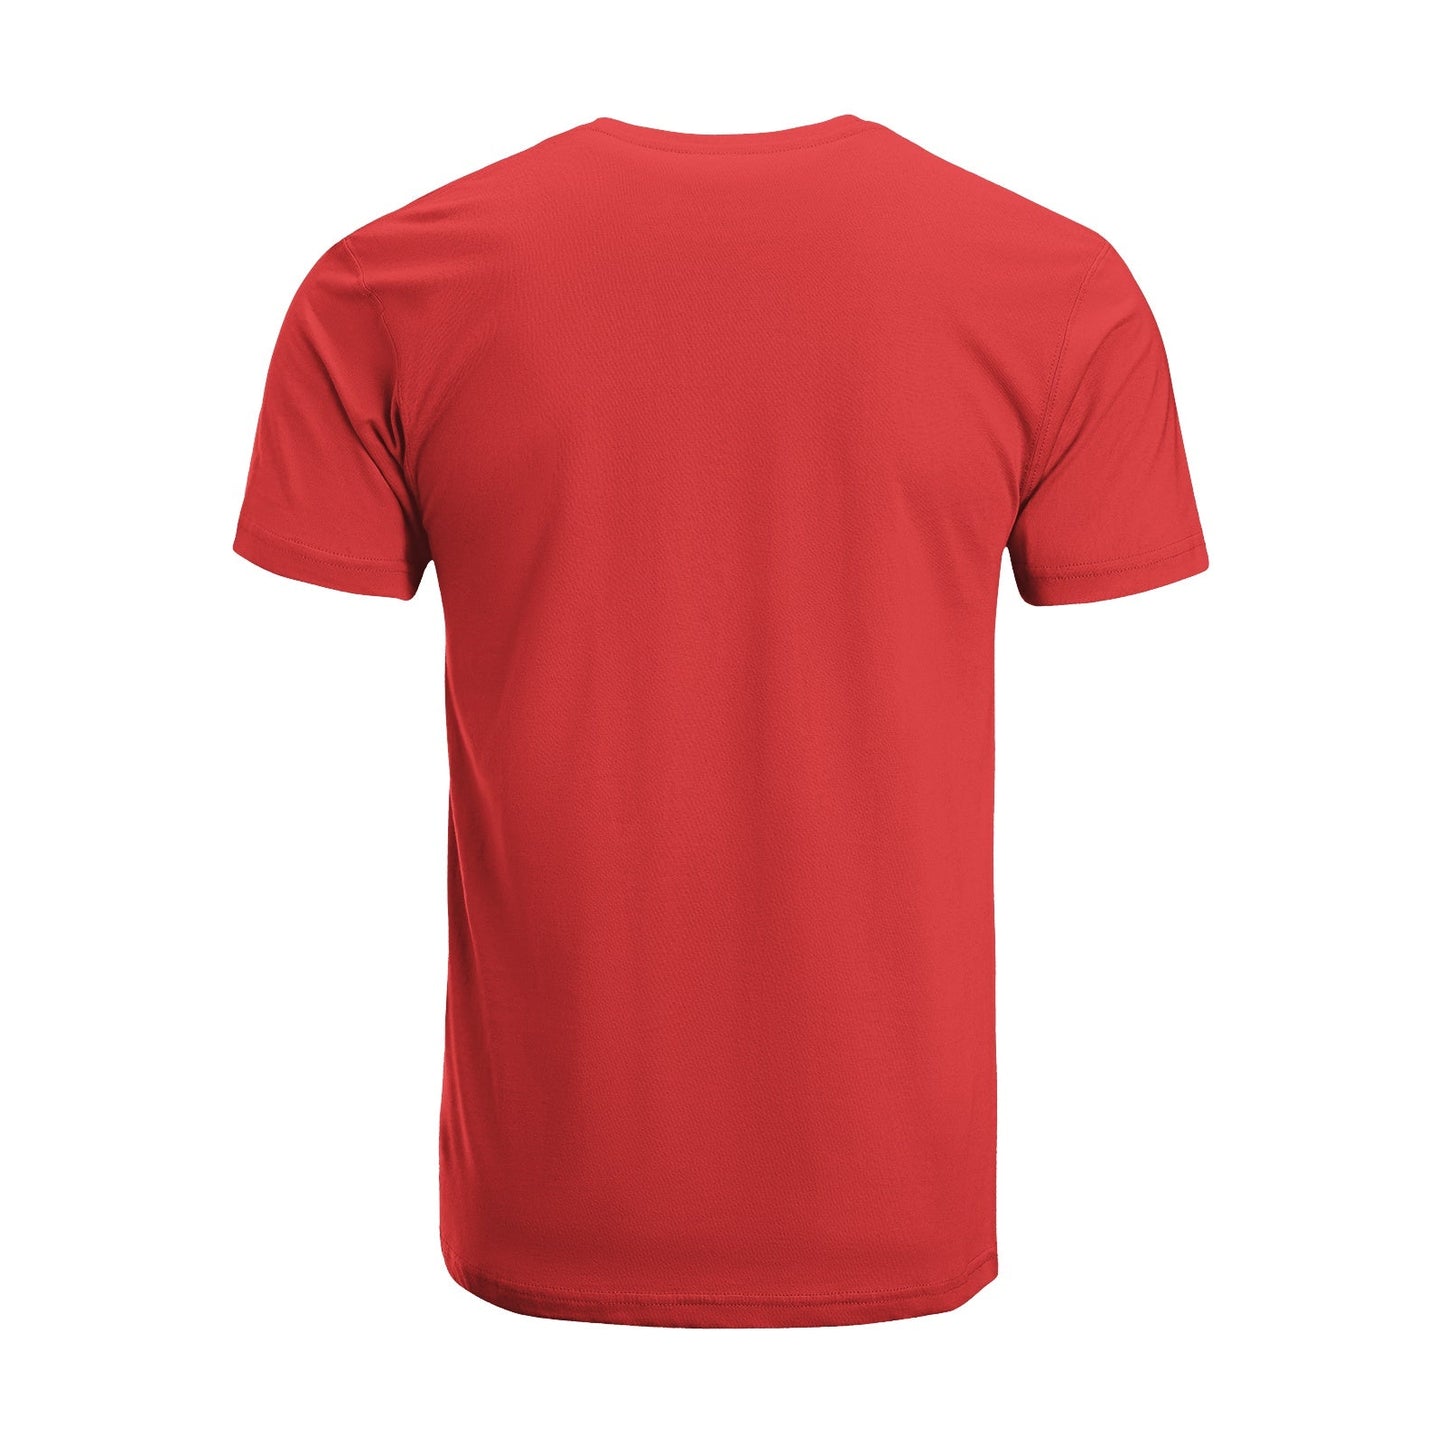 Unisex Short Sleeve Crew Neck Cotton Jersey T-Shirt USA 09